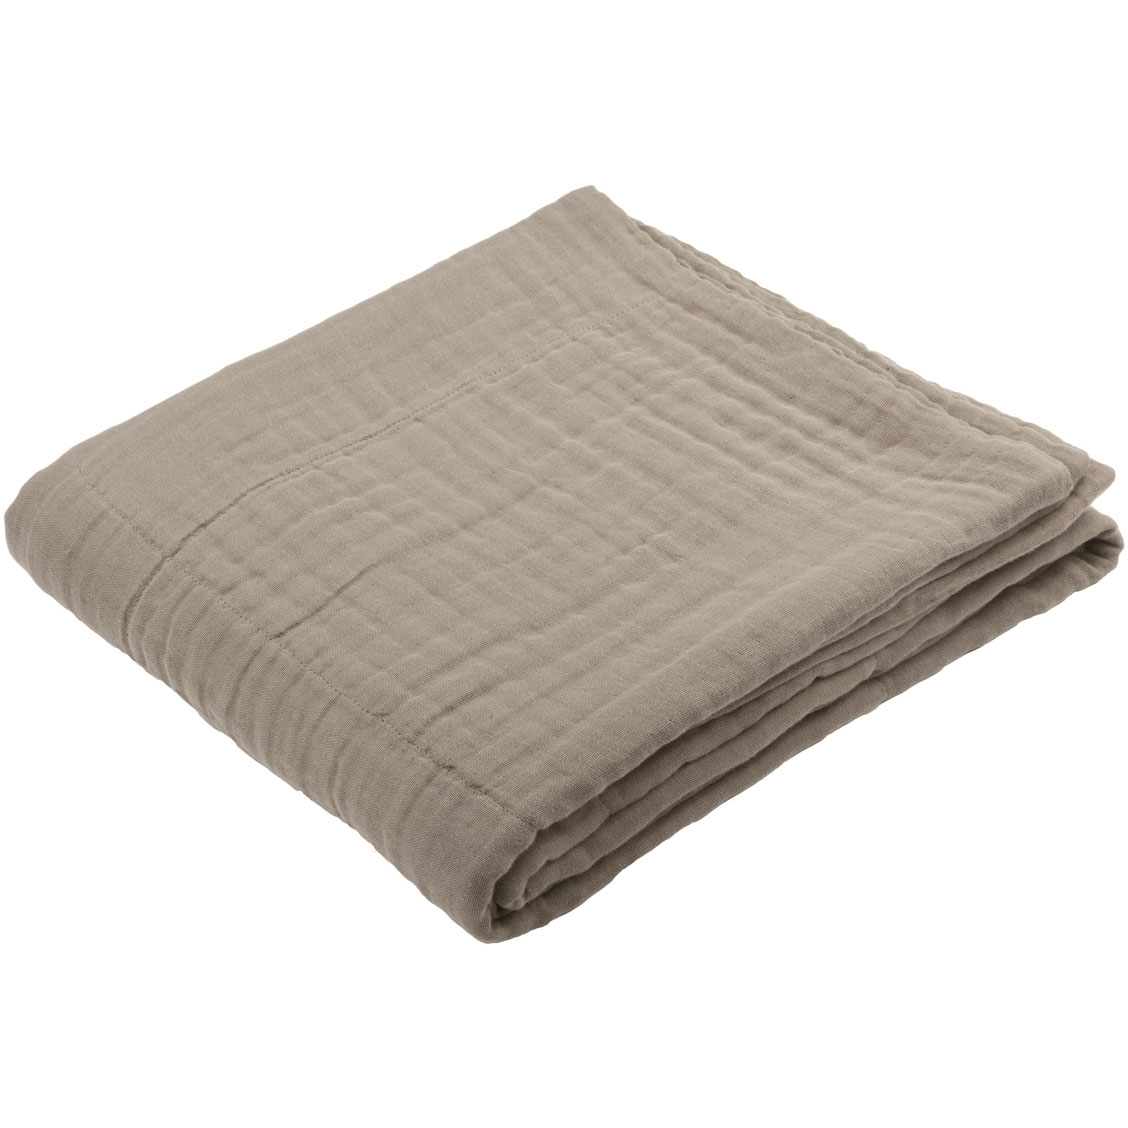 6-Layer Soft Decke, Clay